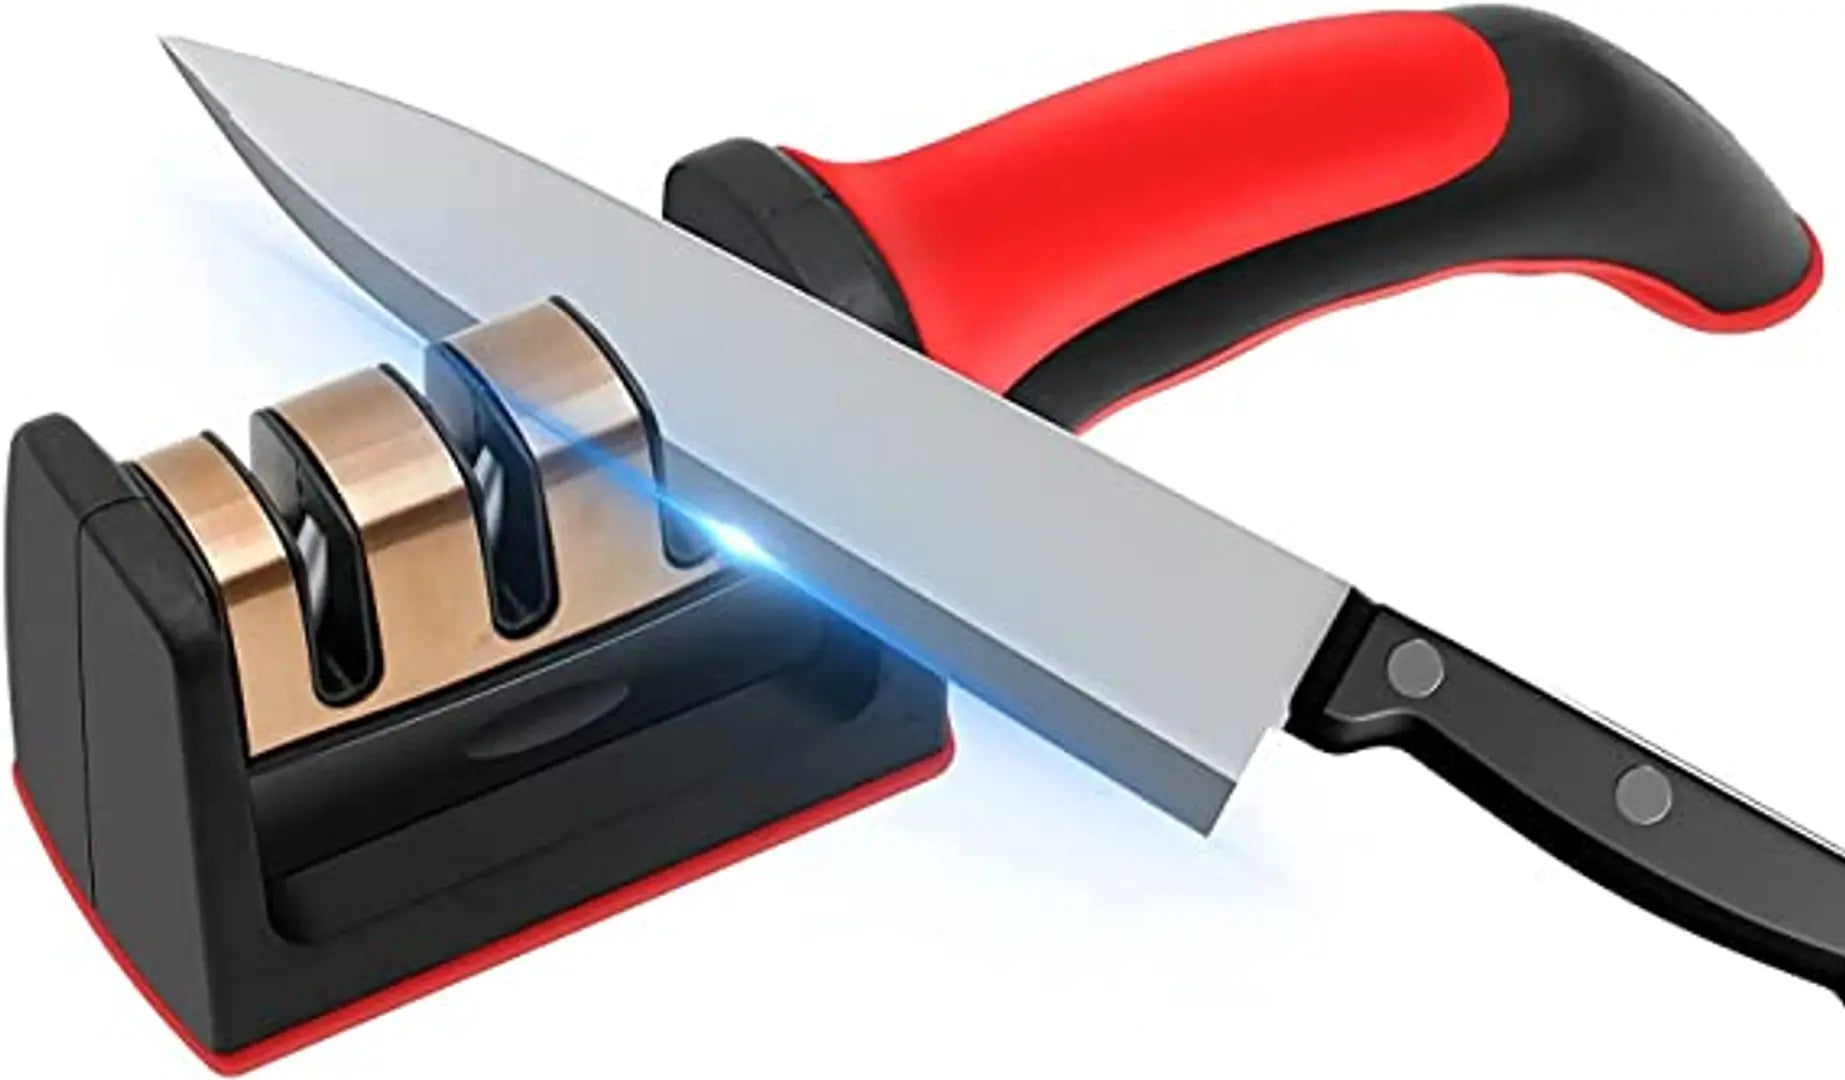 Knife Sharpener Tool for Kitchen, Professional 3 Stage Knife and Scissor Sharpener with Non-Slip Base and Ergonomic Design